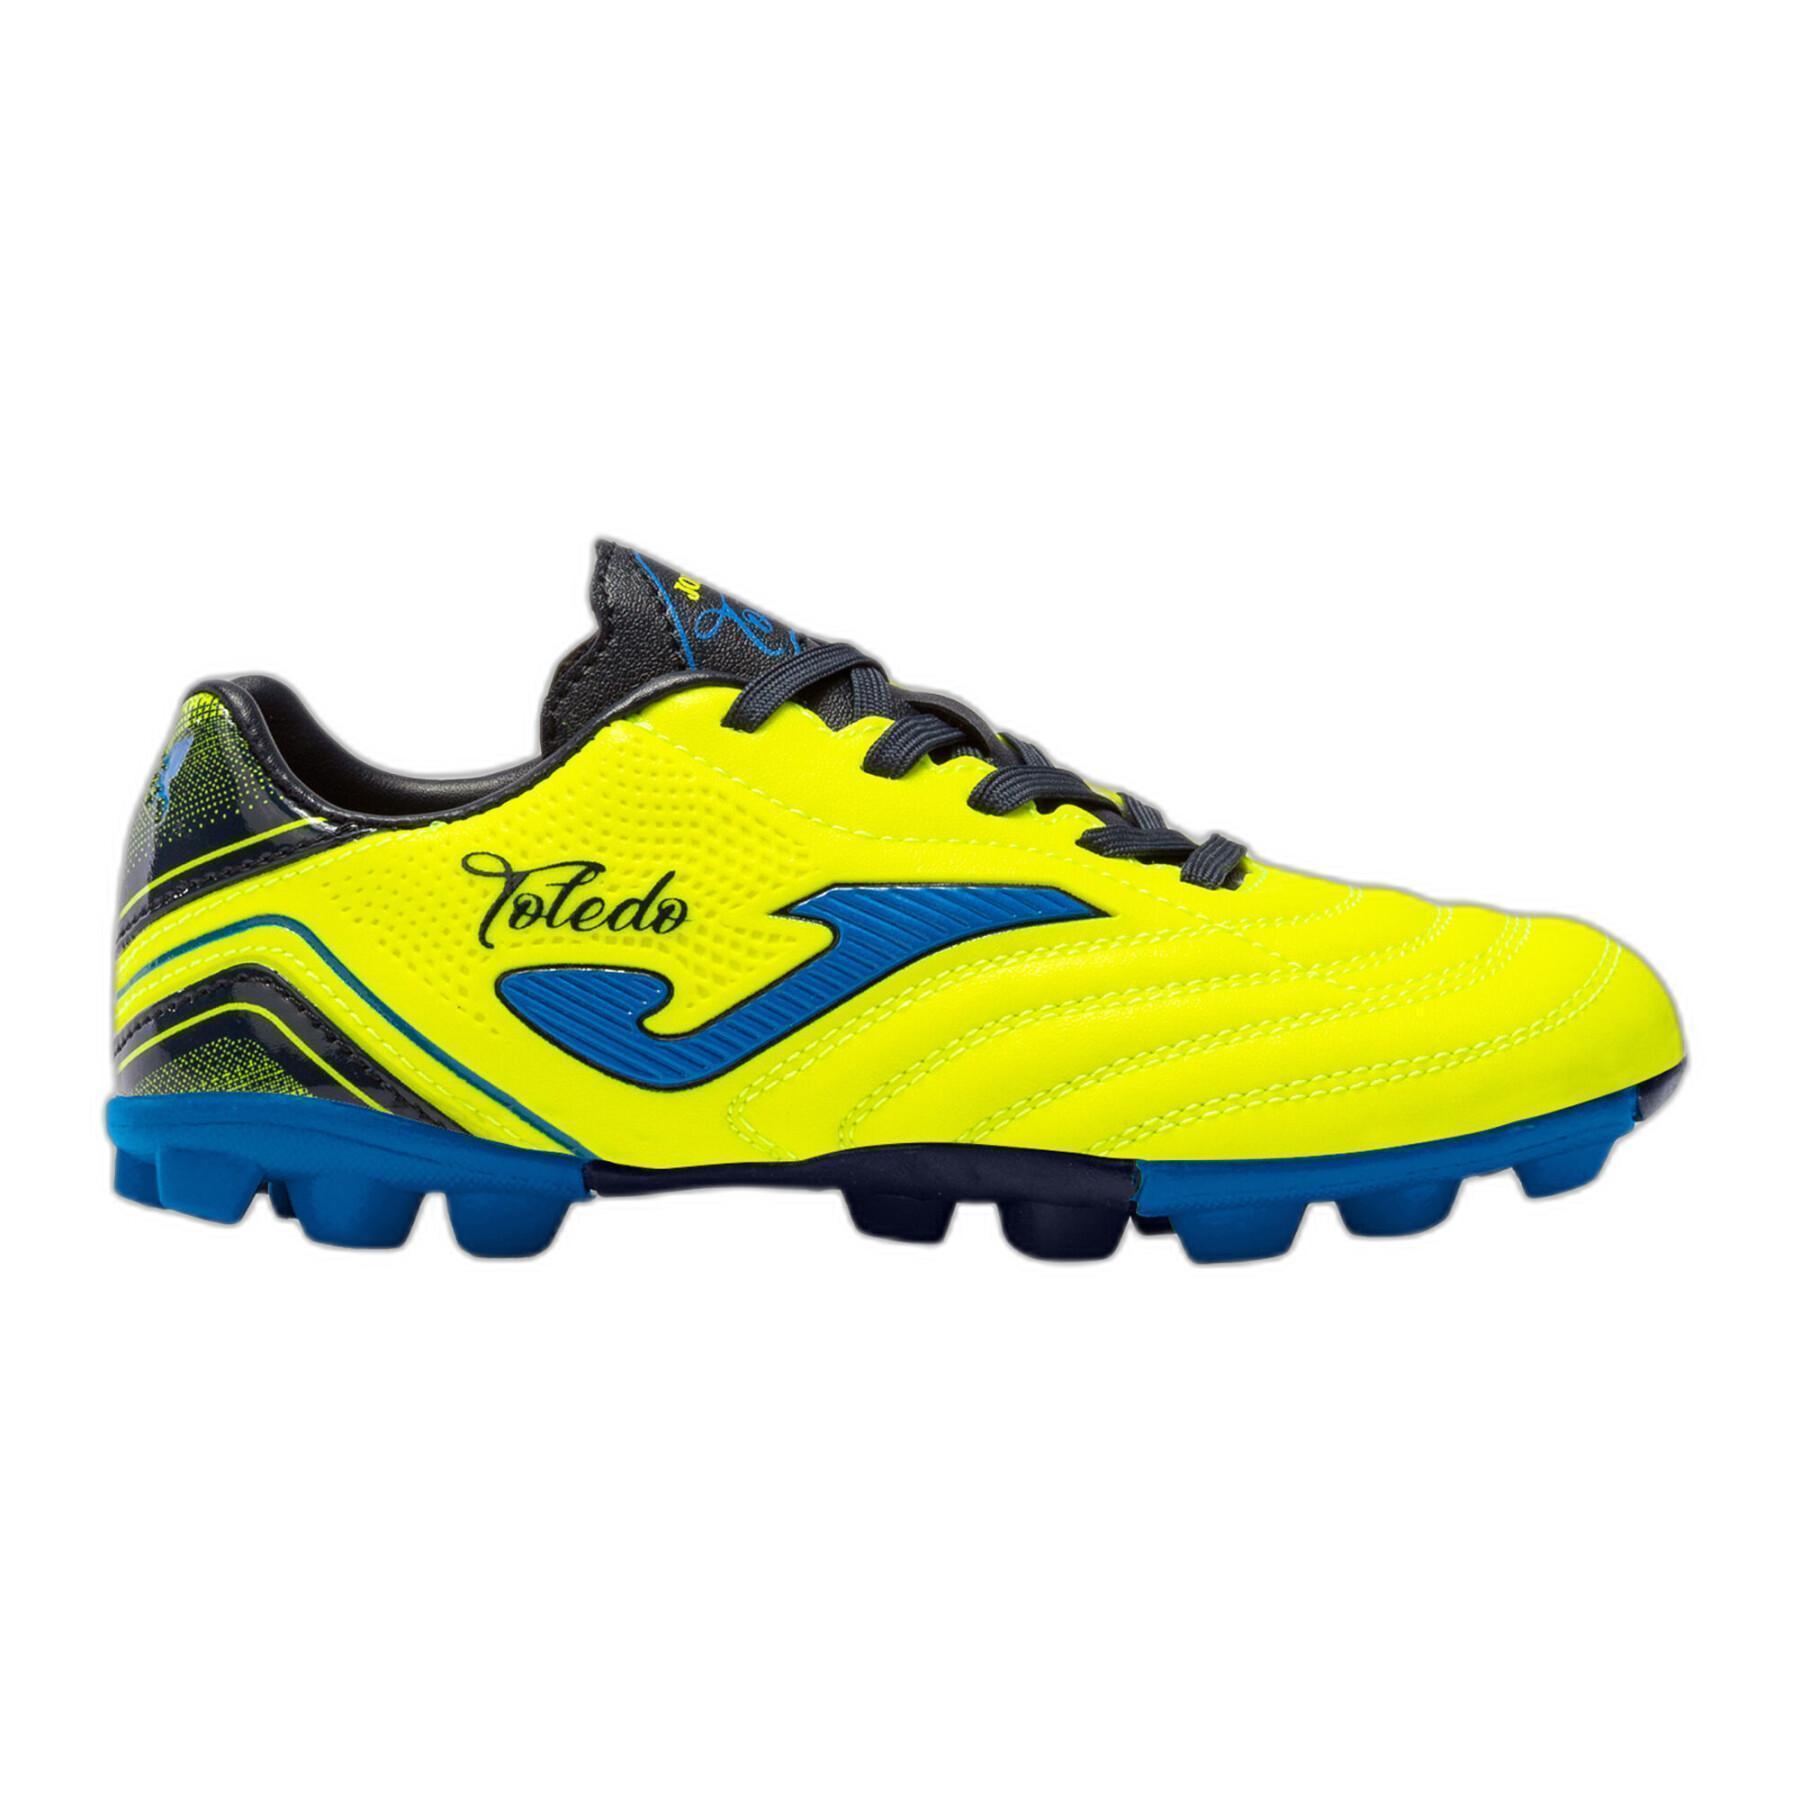 Soccer shoes Joma Toledo 2209